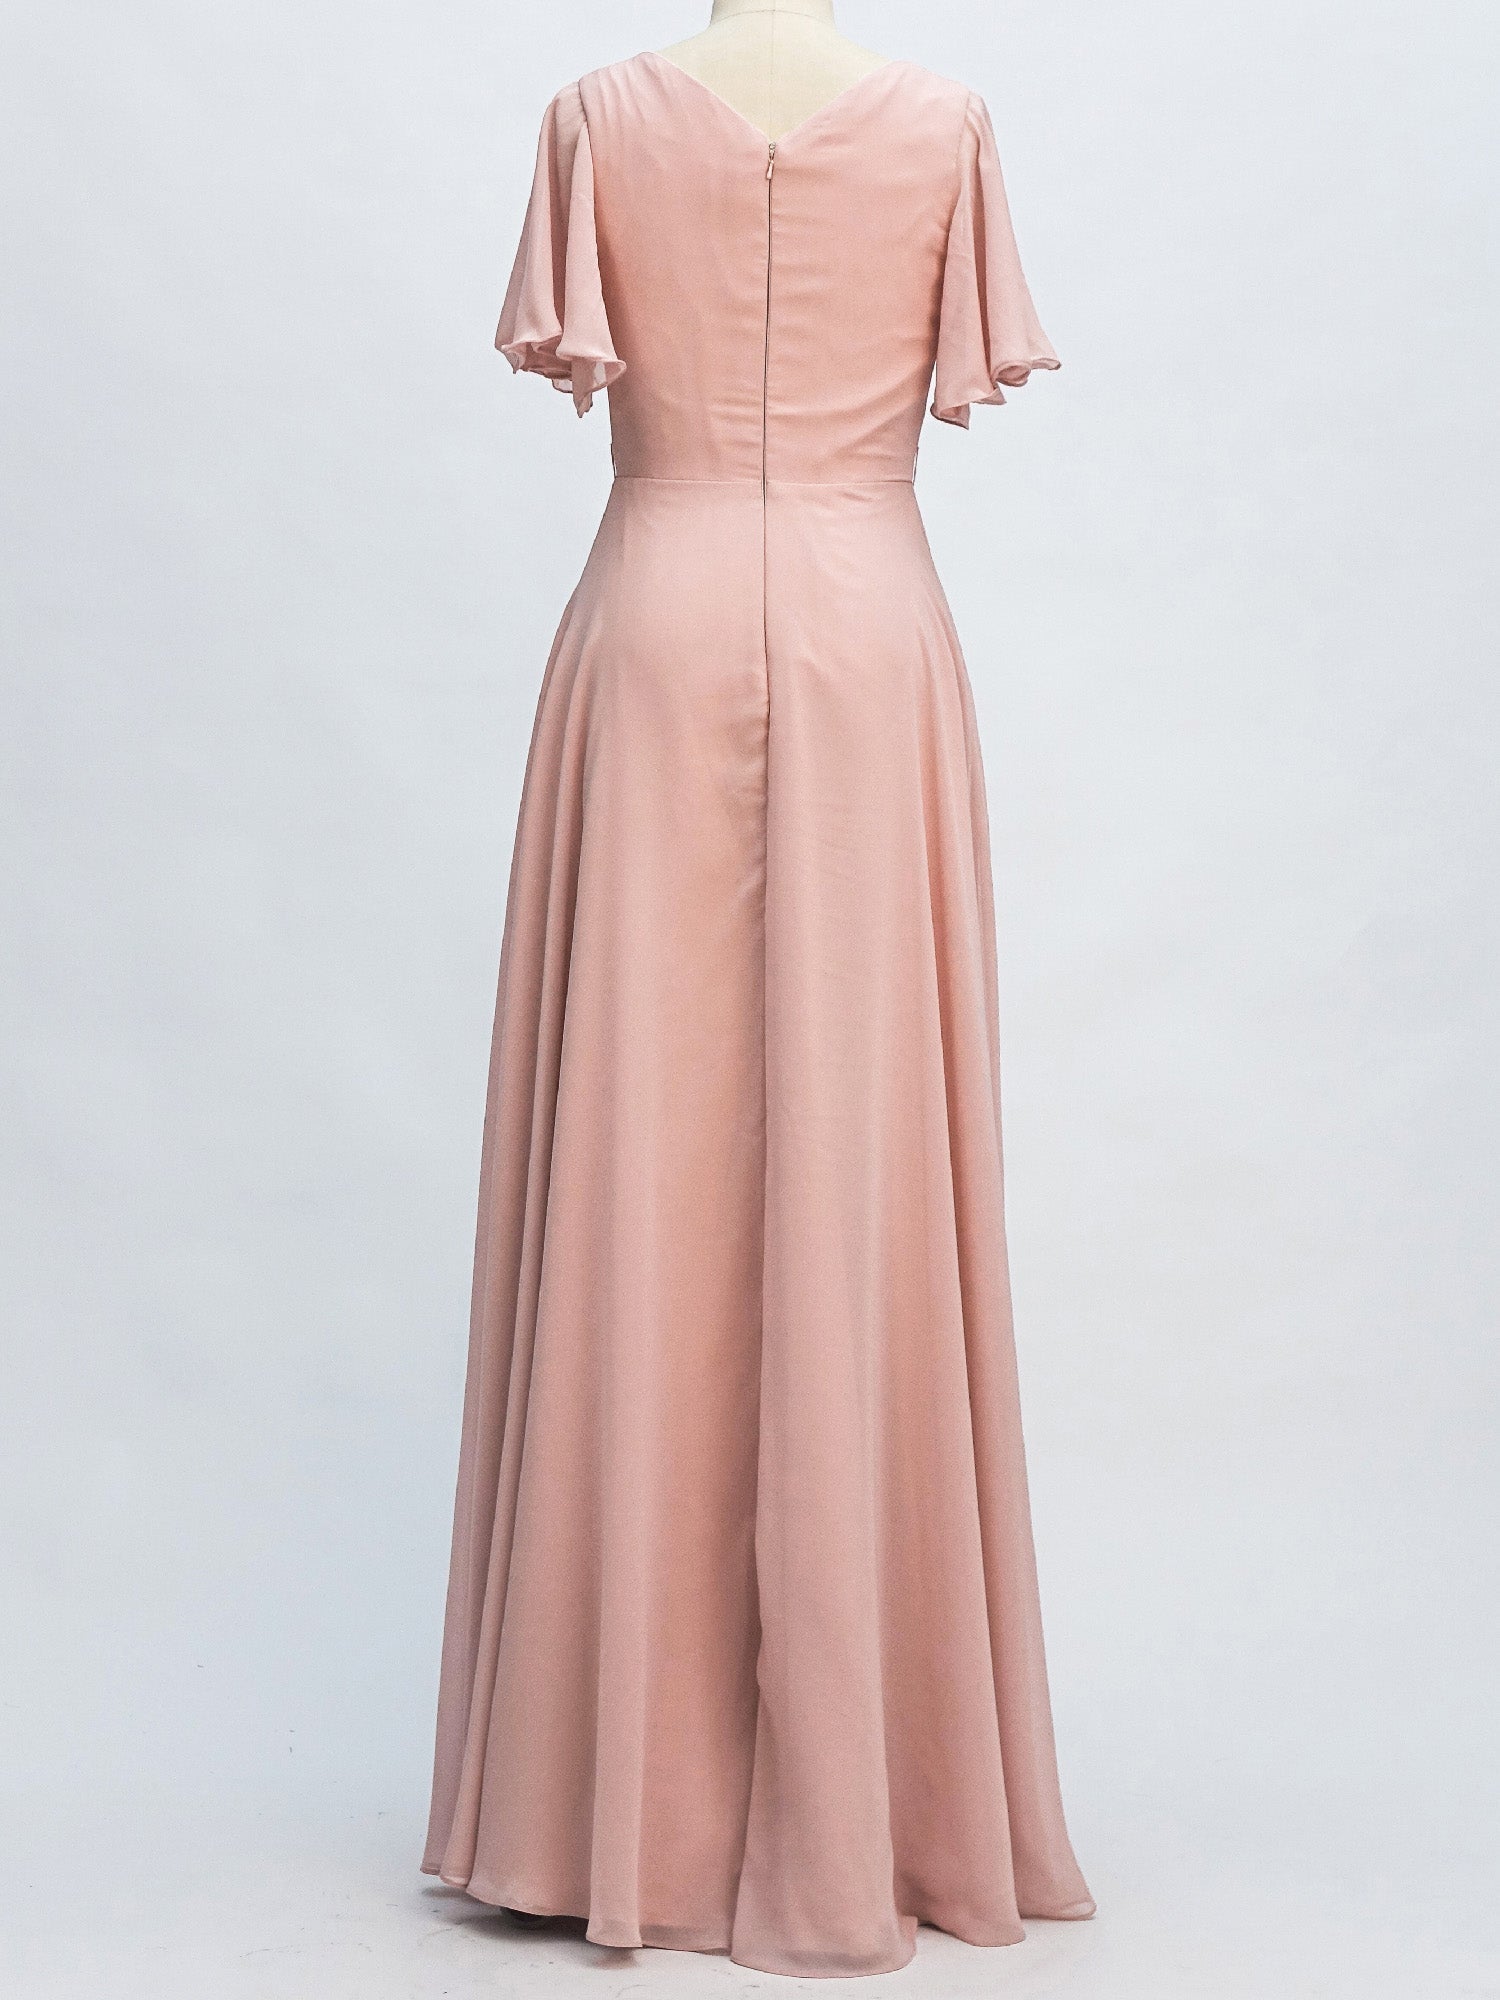 Lace Scoop Neck Sleeveless Bridesmaid Dress| Plus Size | 60+ Colors